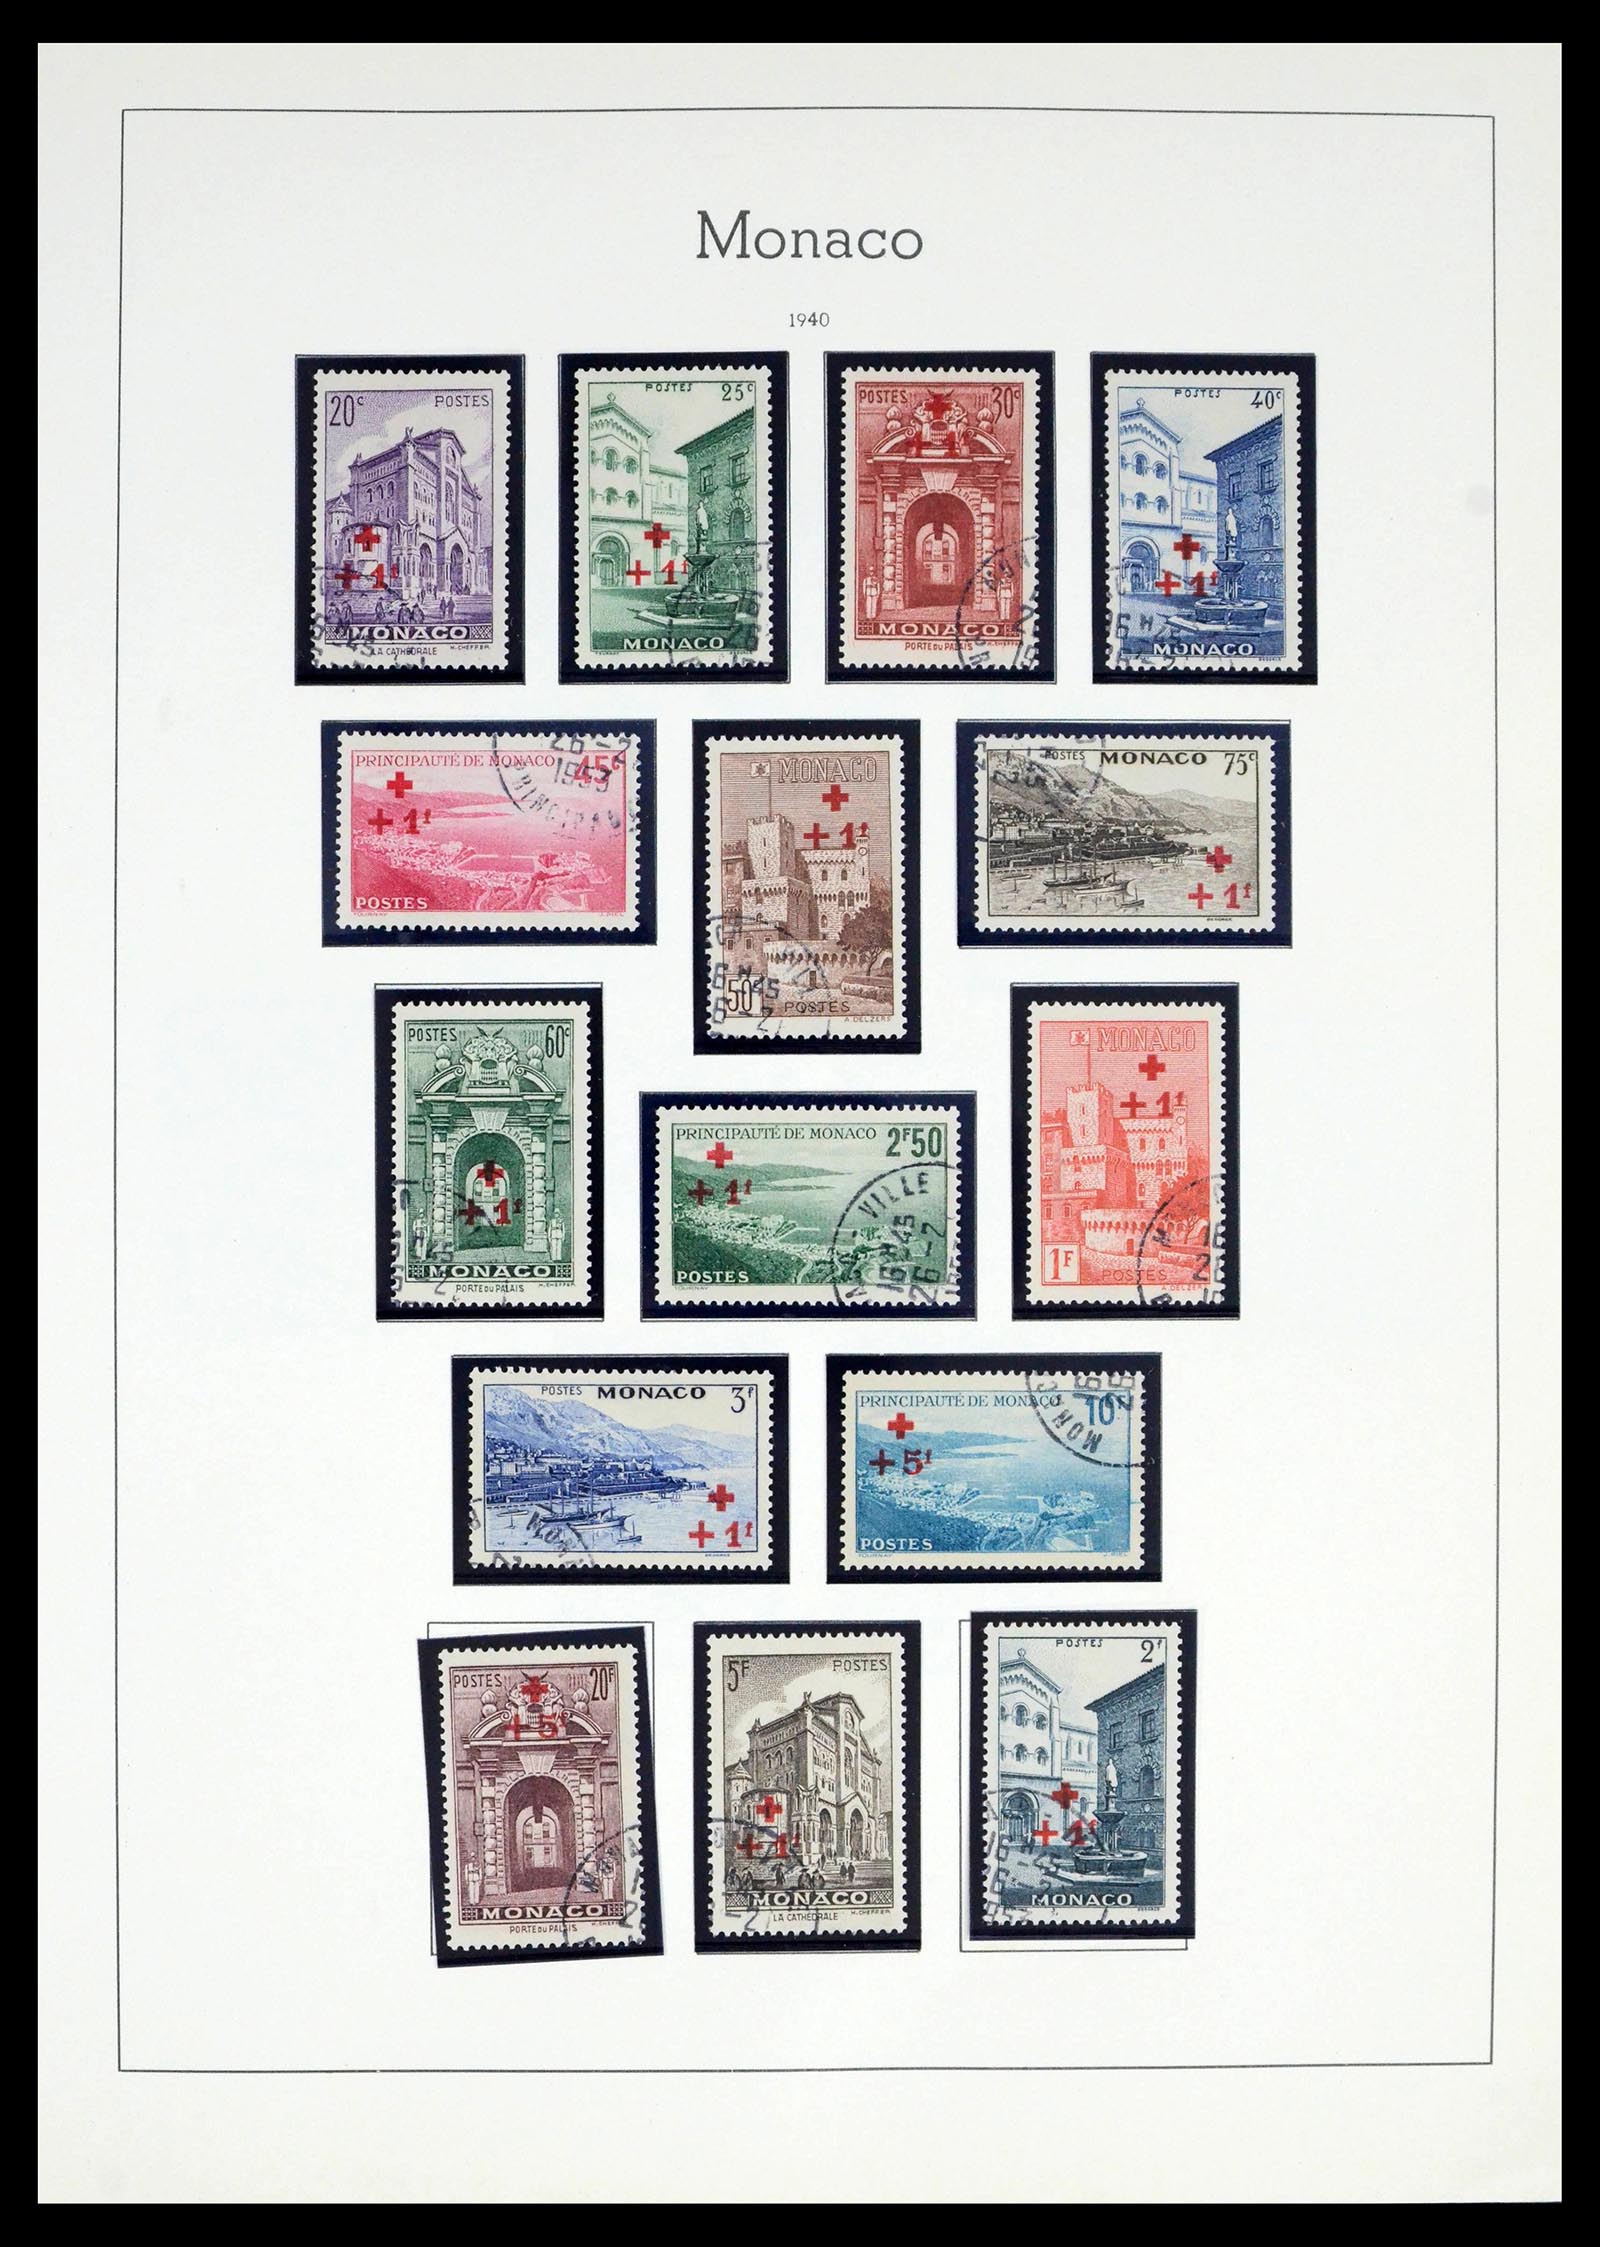 39392 0016 - Stamp collection 39392 Monaco 1885-1999.